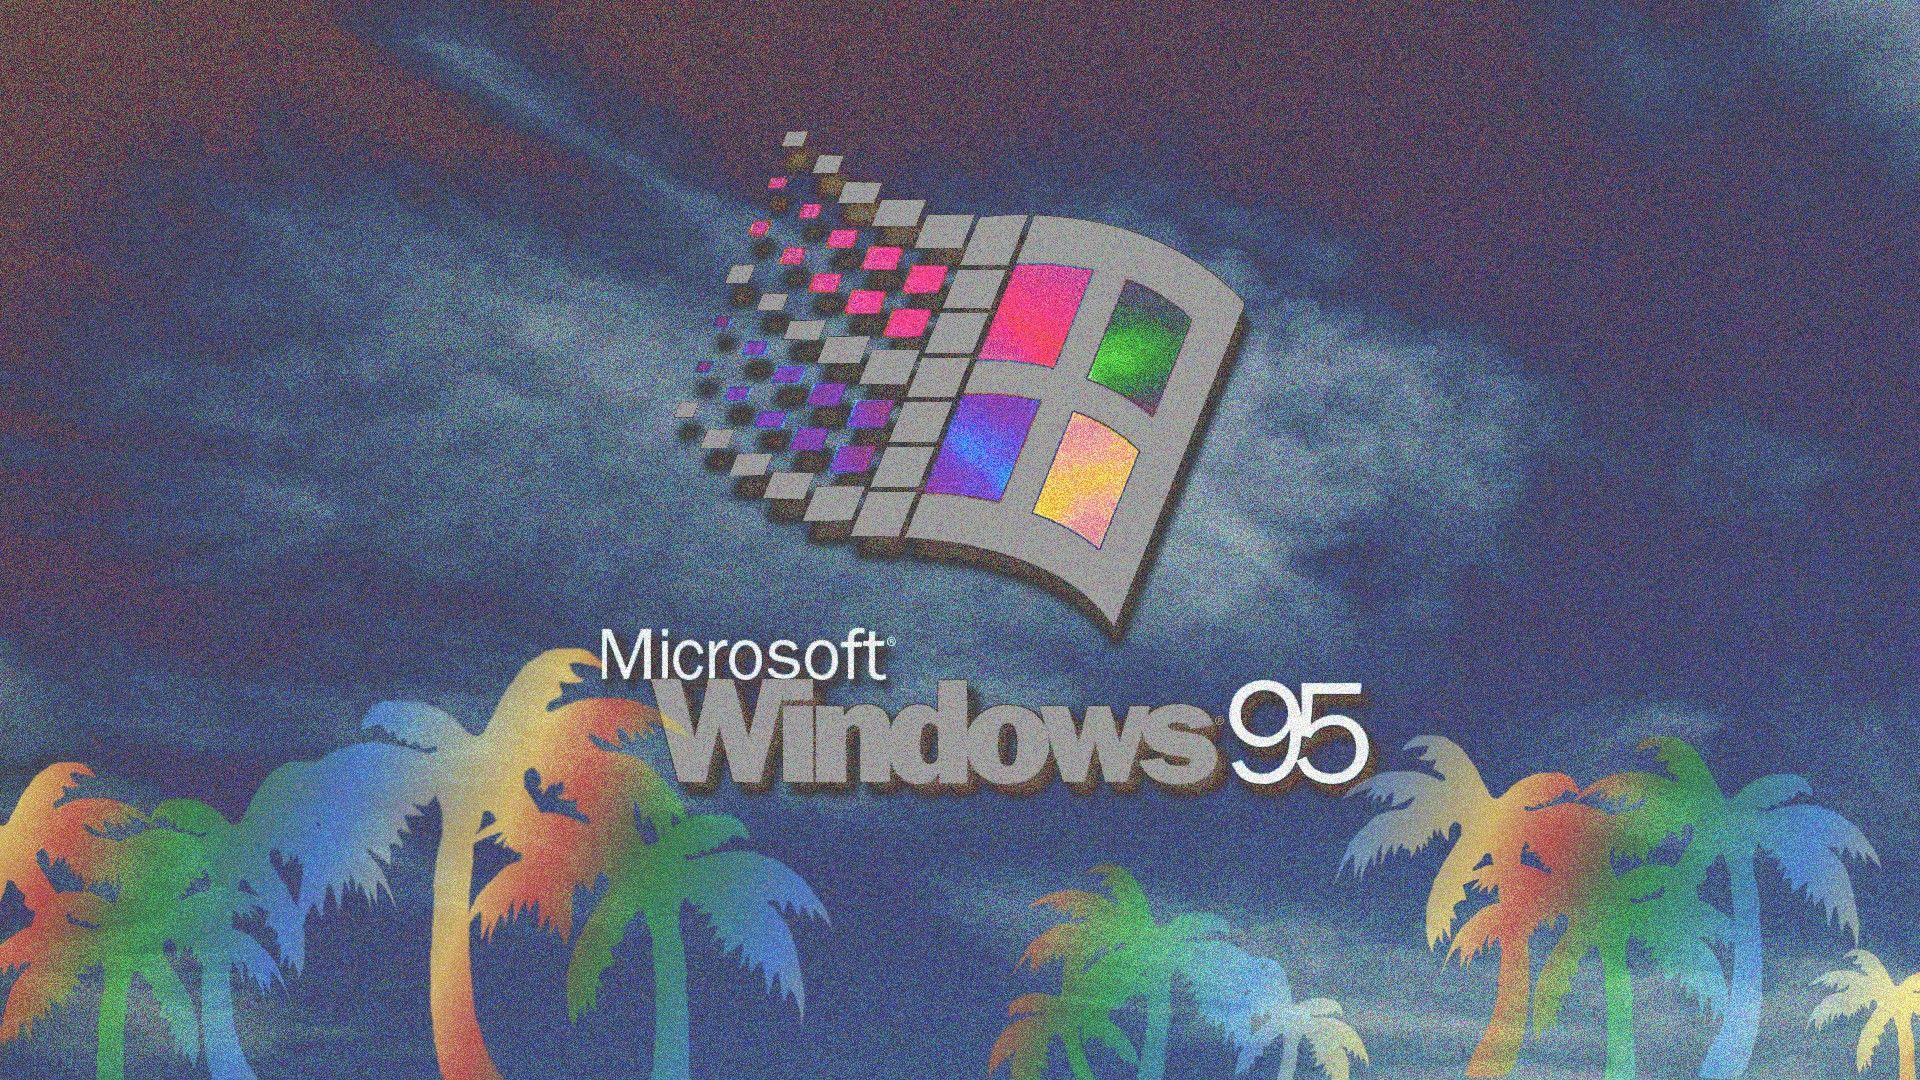 Microsoft Windows, #vaporwave, #palm trees, #Windows 95. Wallpaper